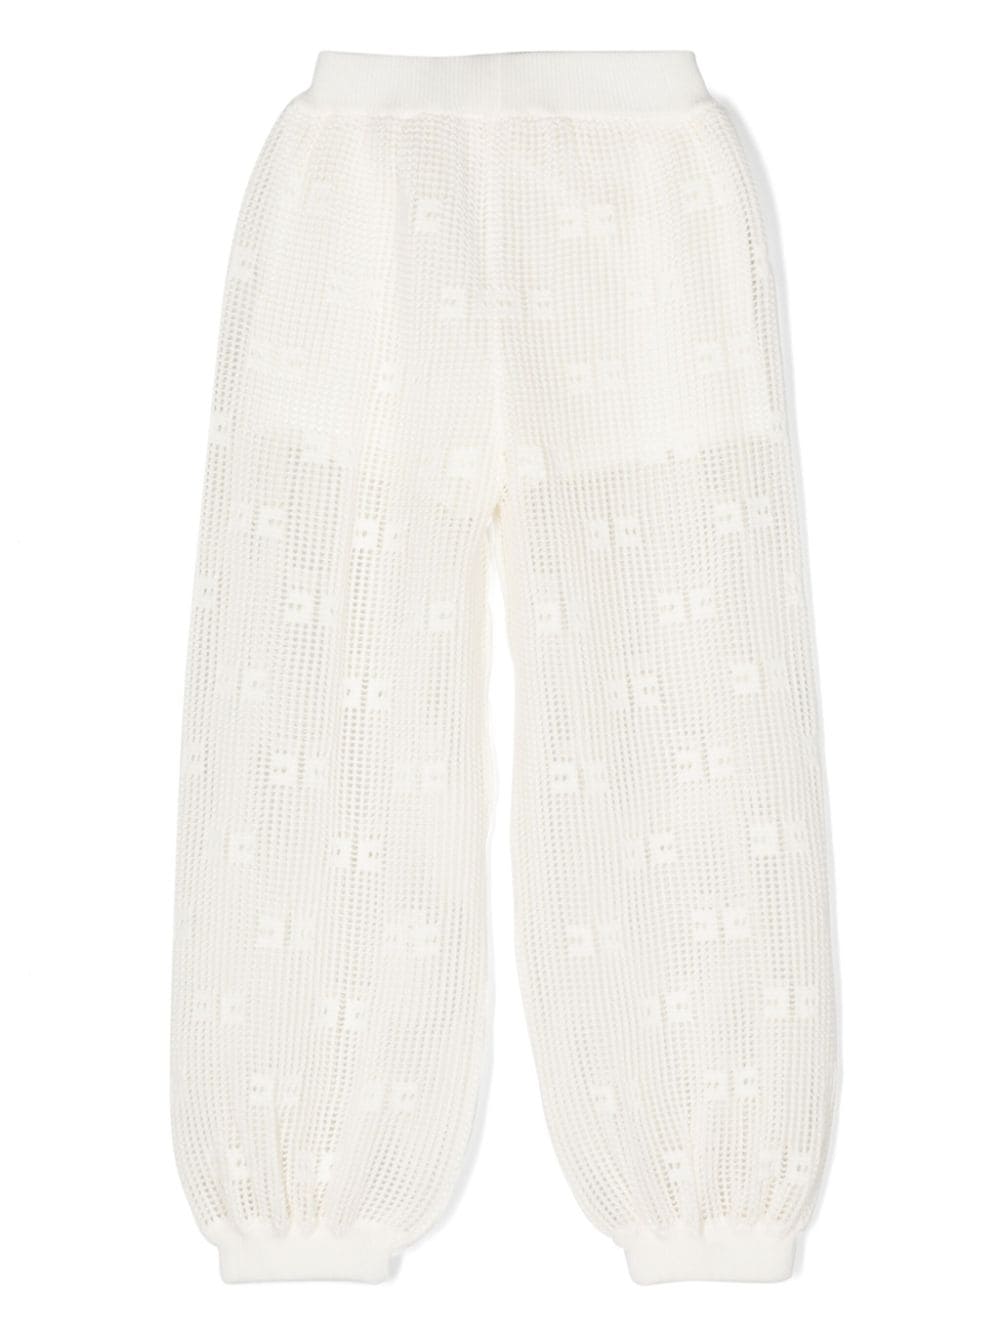 Pantalone bianco avorio per bambina